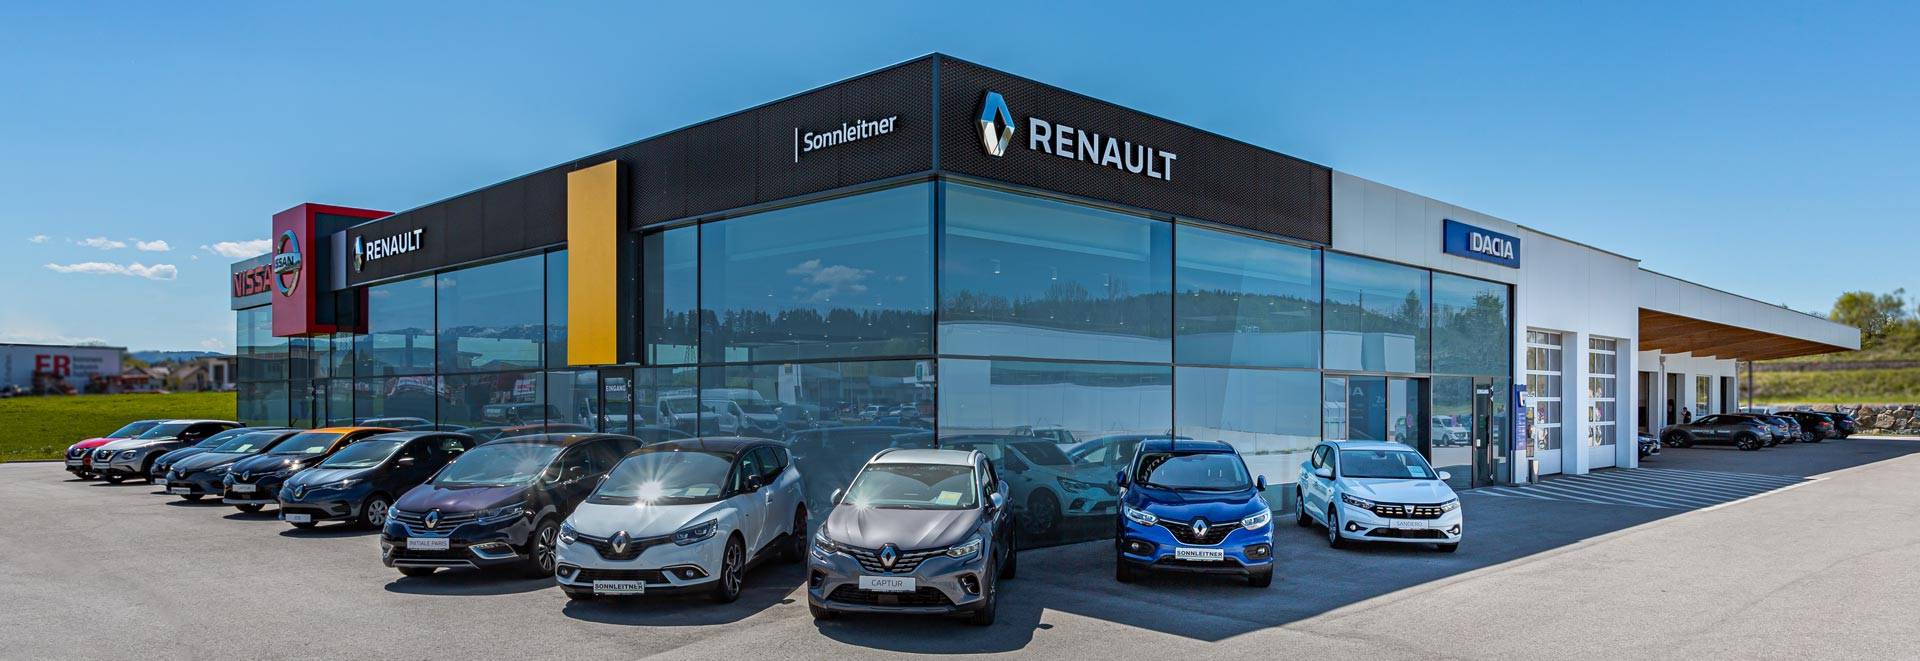 Renault Wien by Sonnleitner 100% Auto